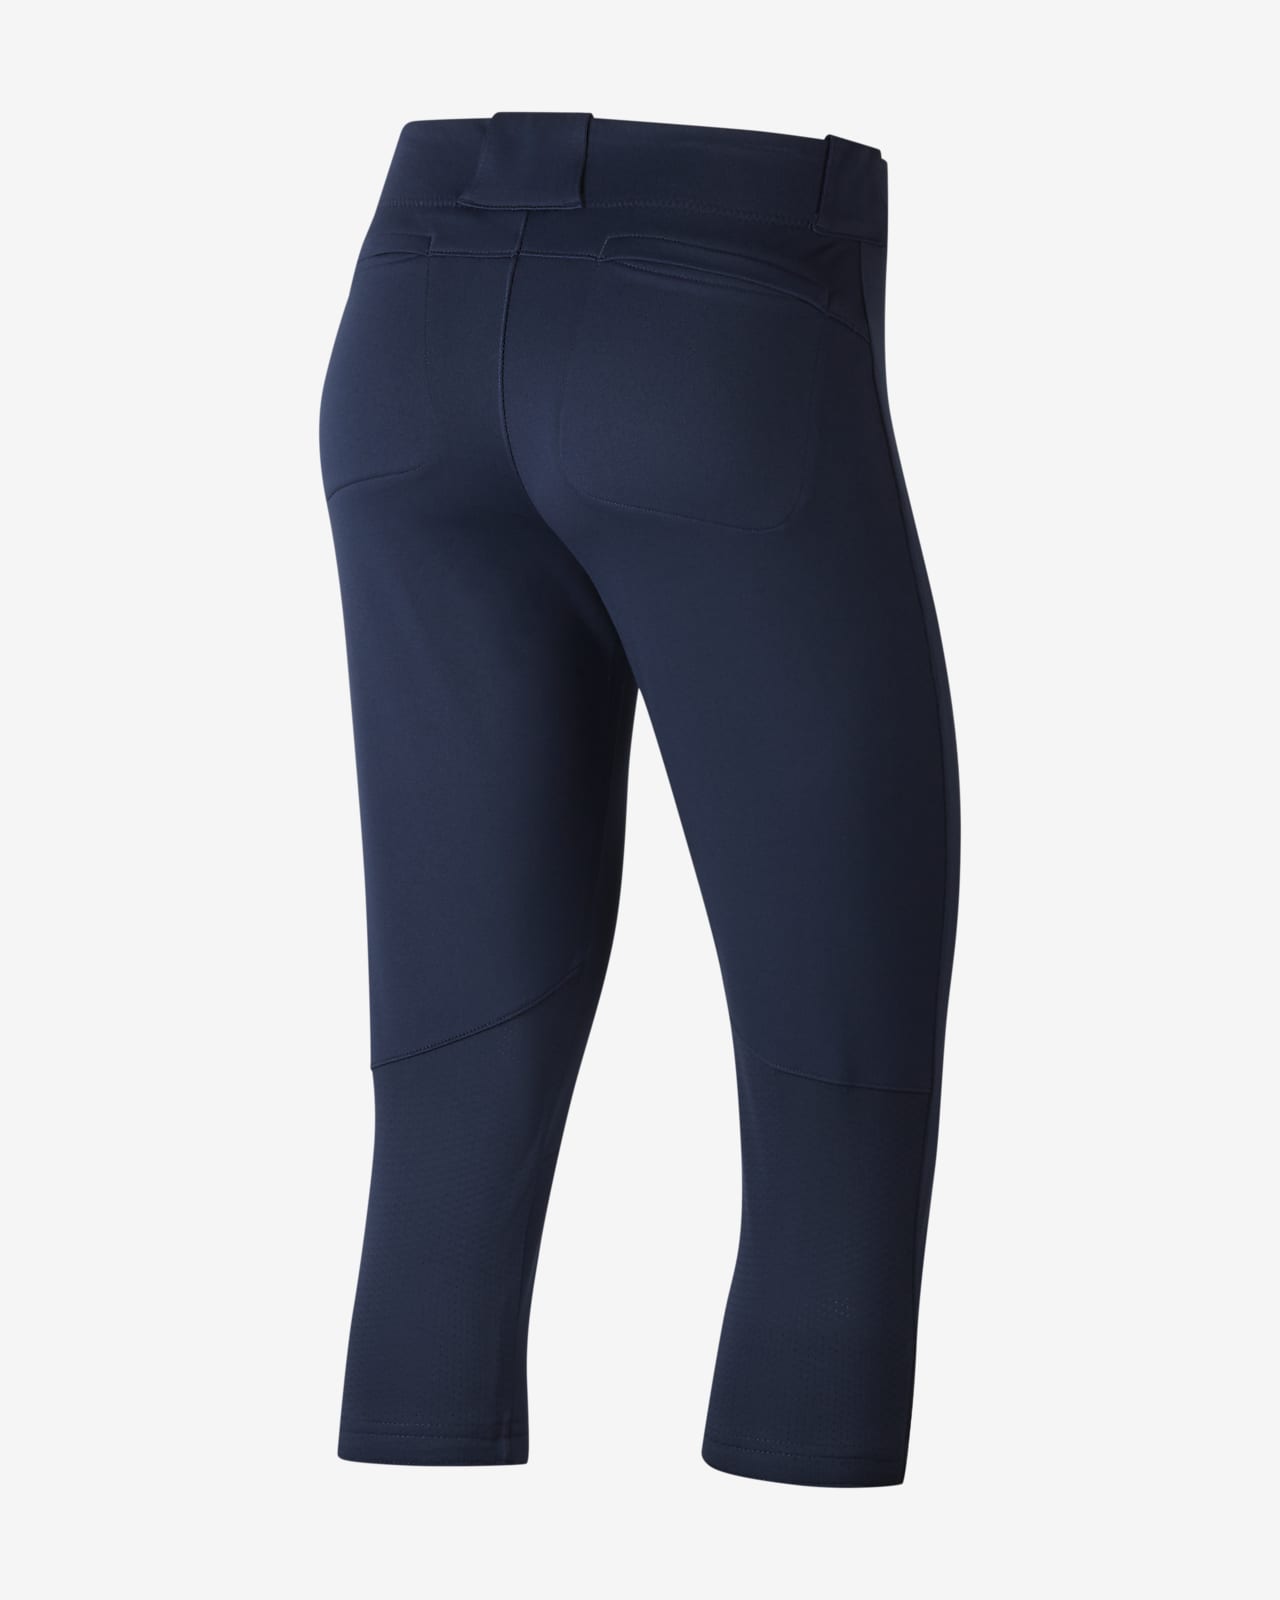 Explorer Pants - Navy Blue, Women's Pants